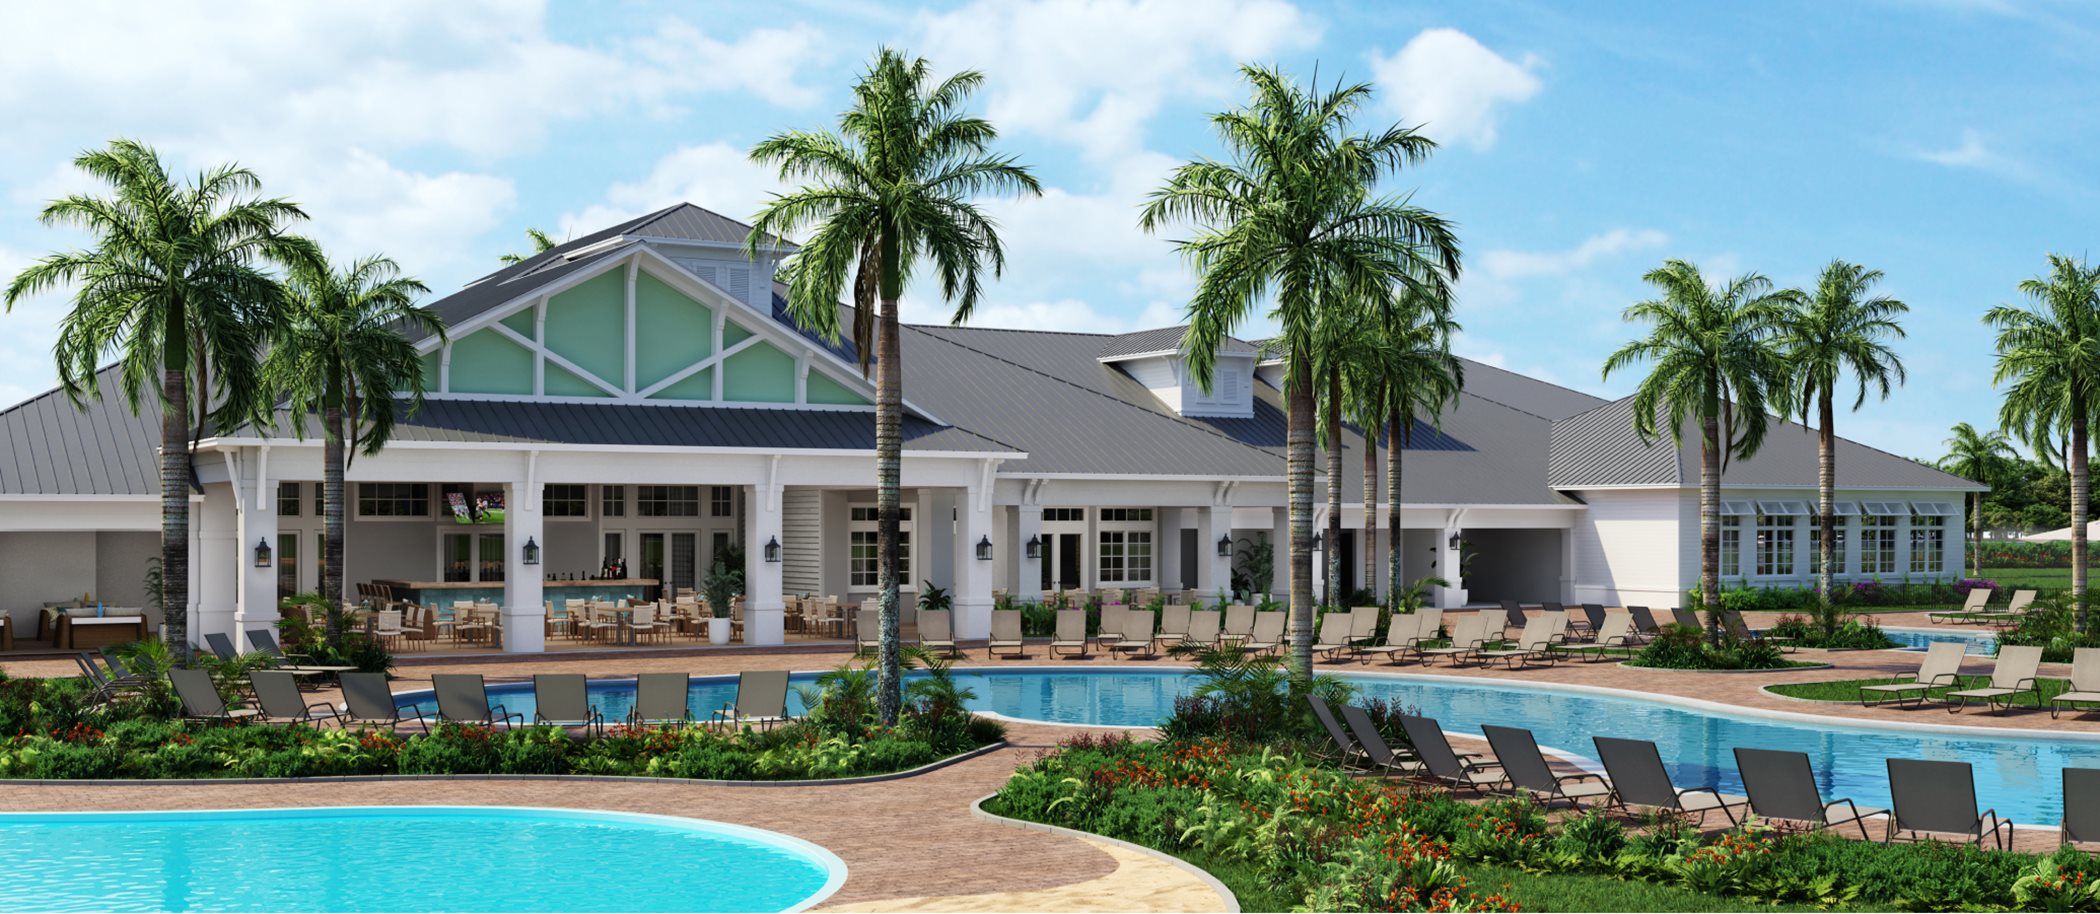 Lorraine Lakes Resort pool and lounge